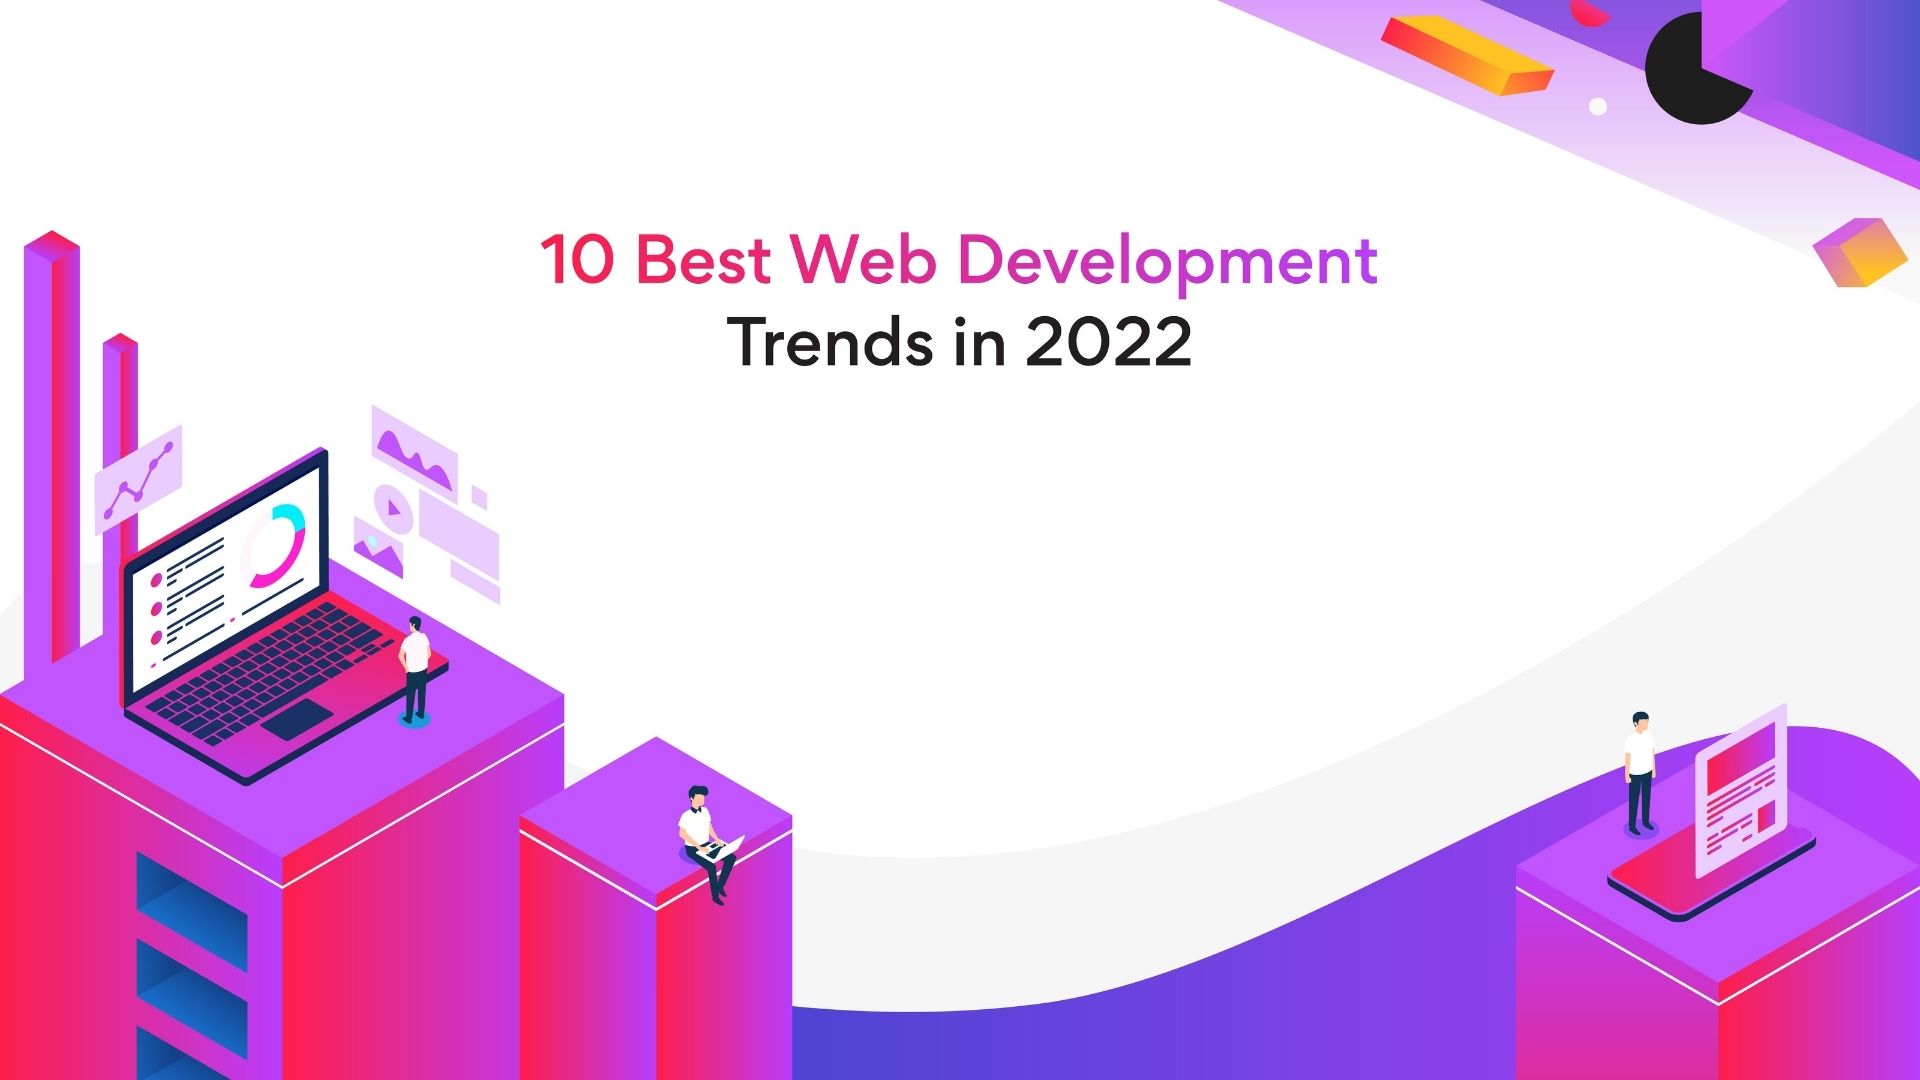 Web development trends 2022